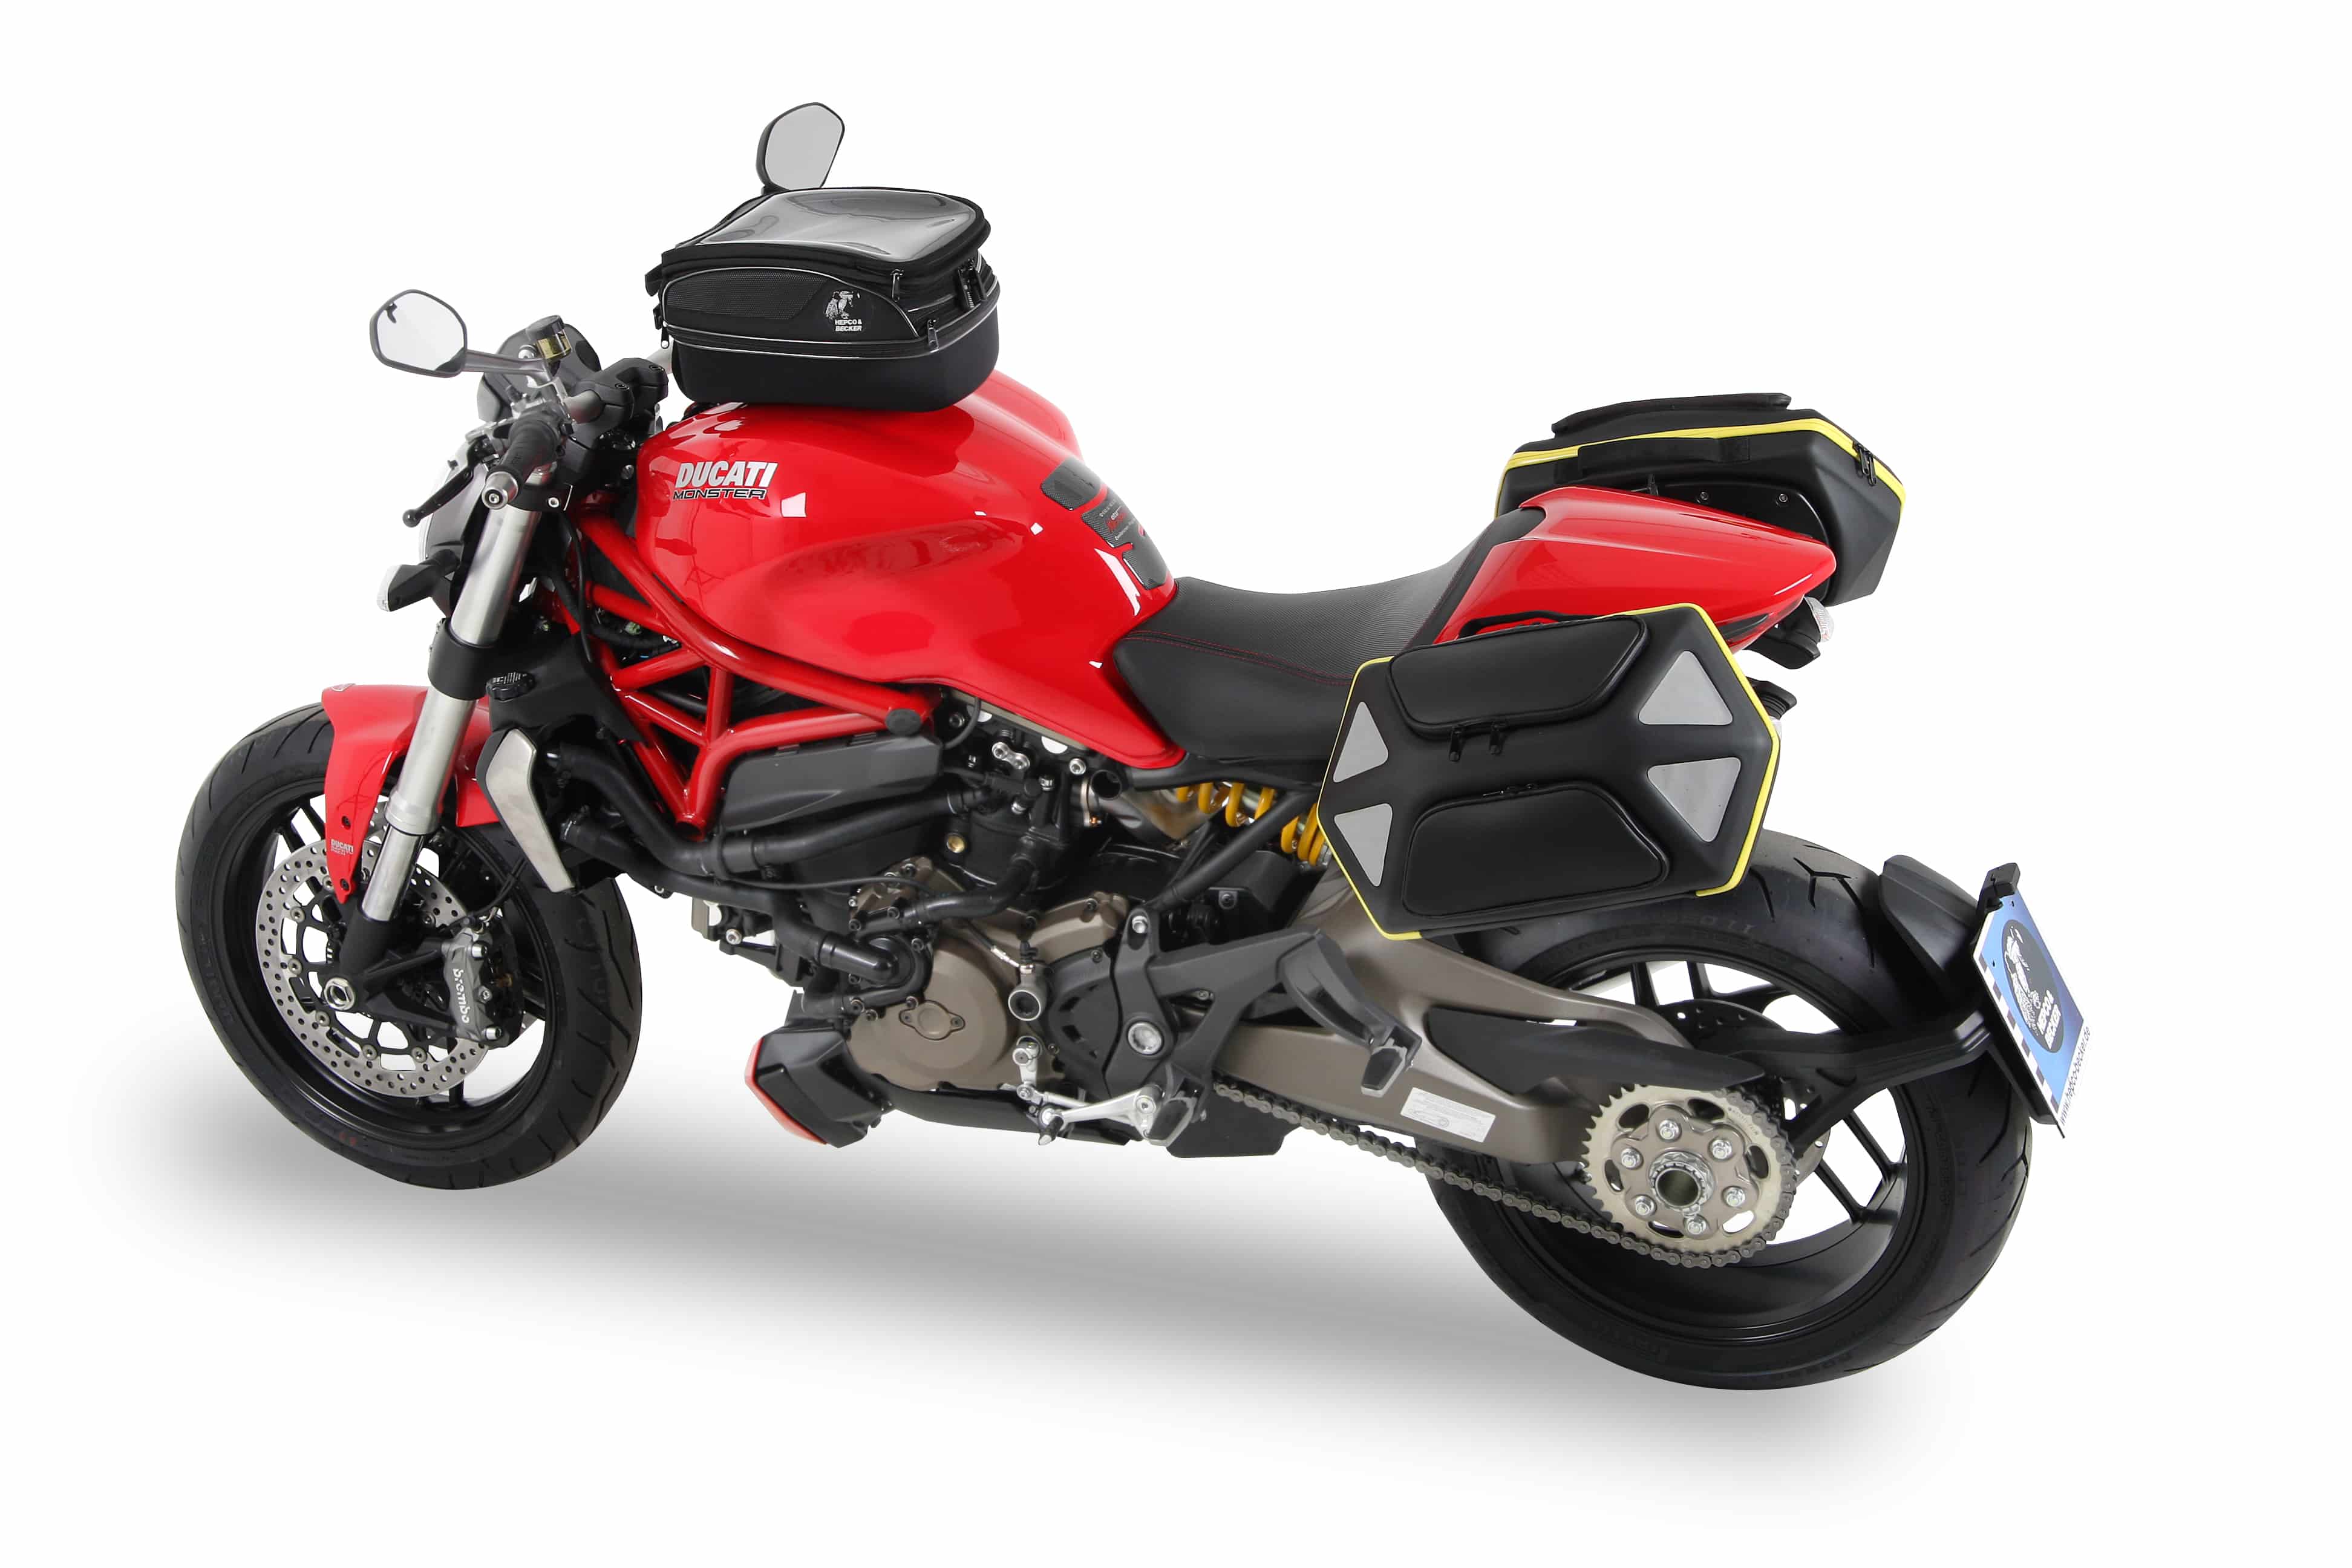 C-Bow sidecarrier for Ducati Monster 1200/S (2013-2016)